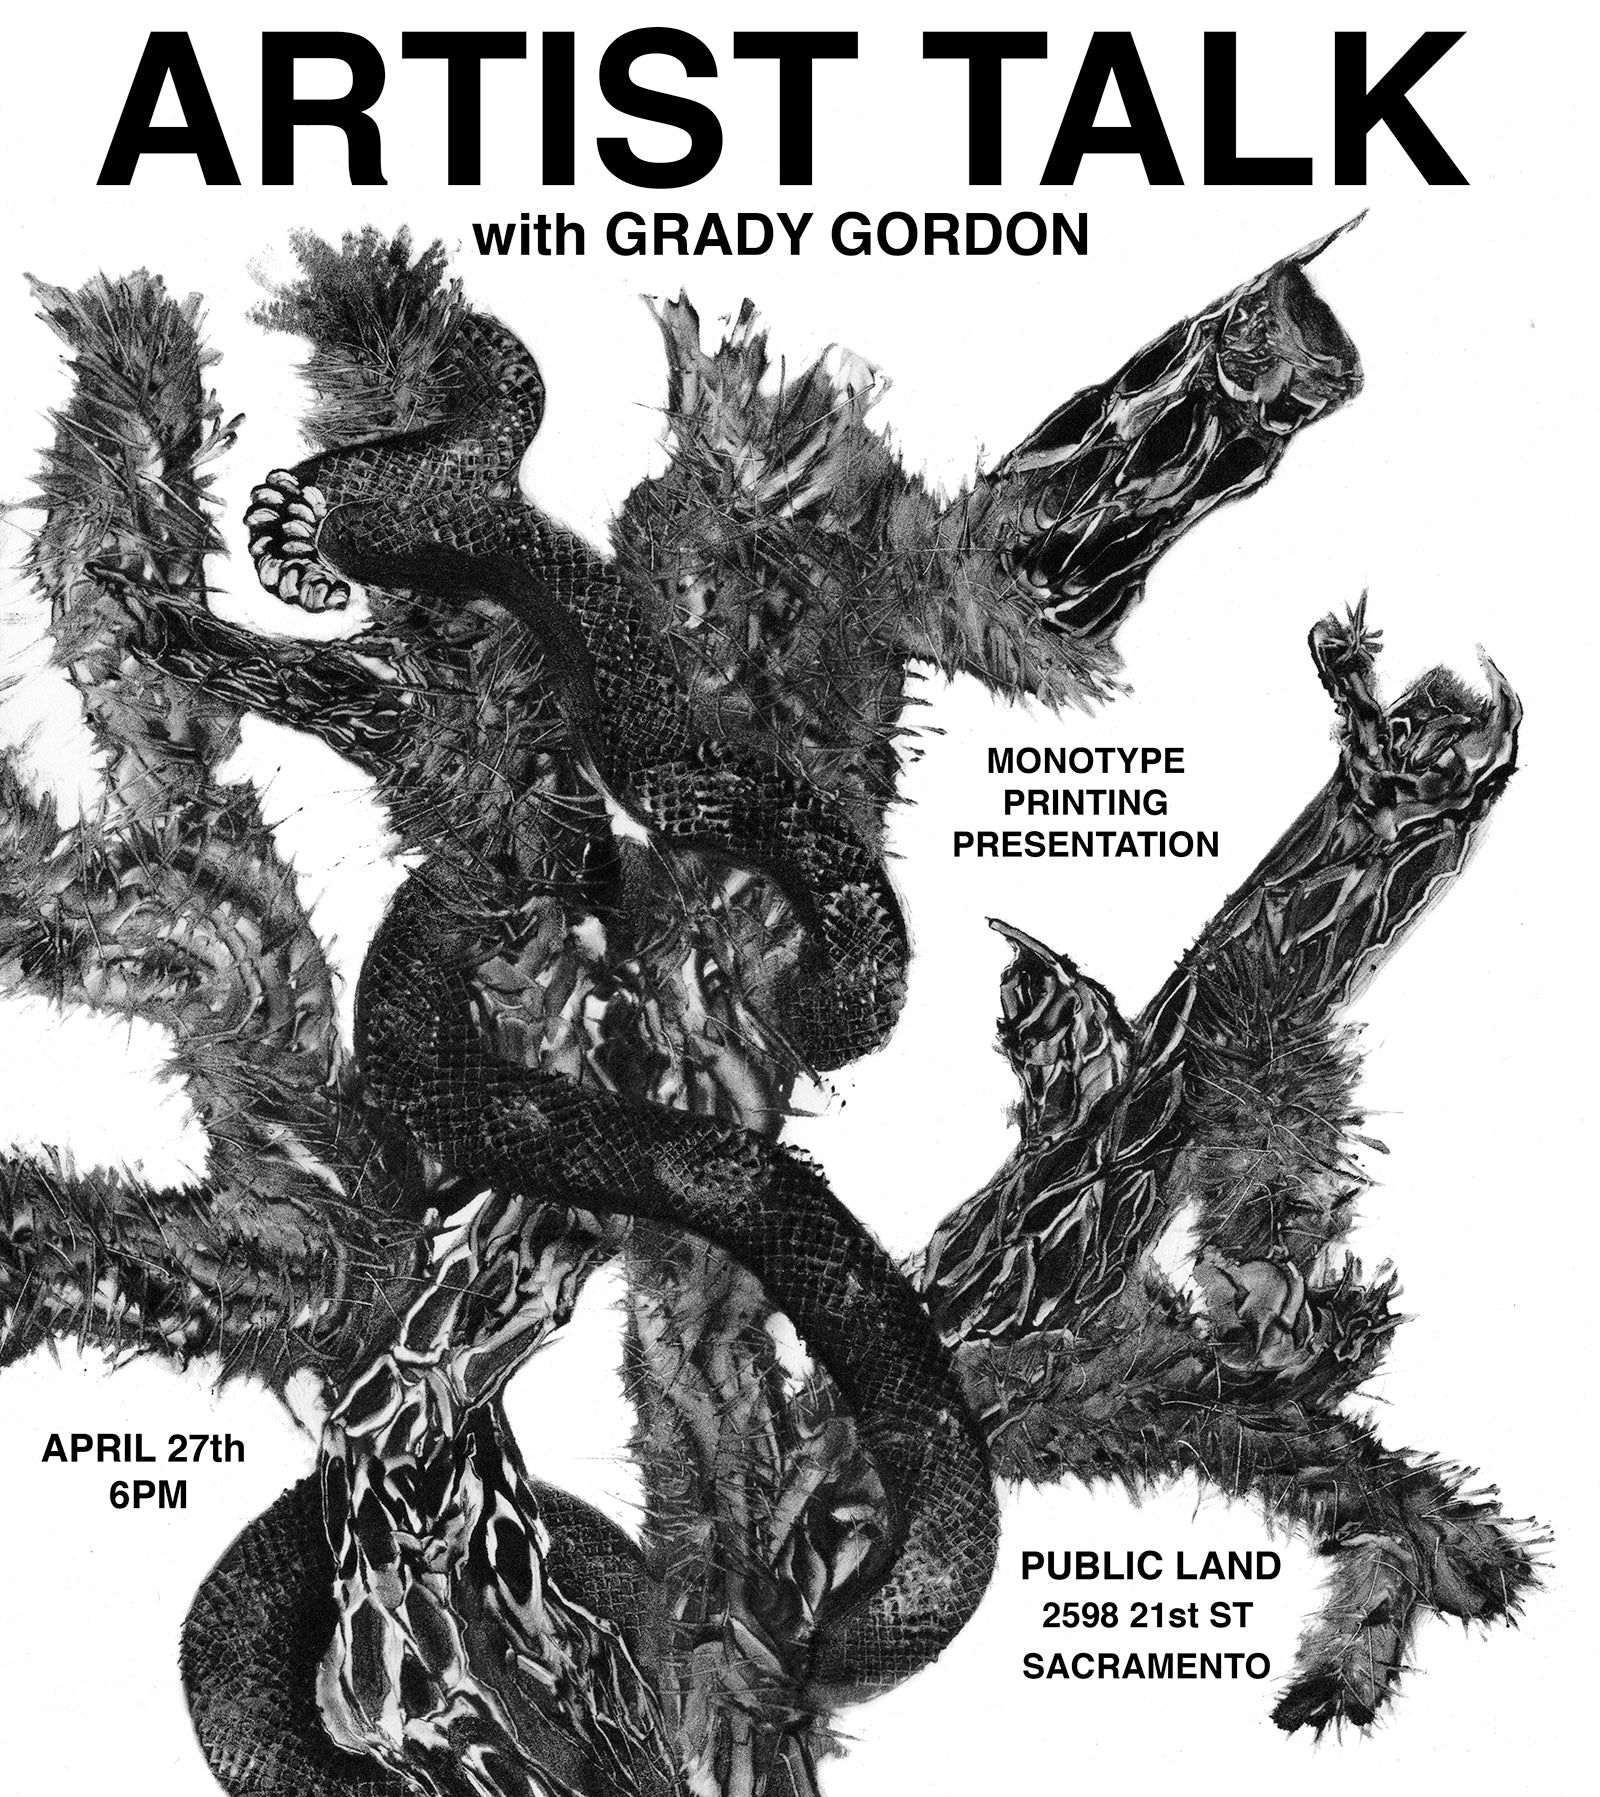 Artist Talk with Grady Gordon at Public Land Gallery